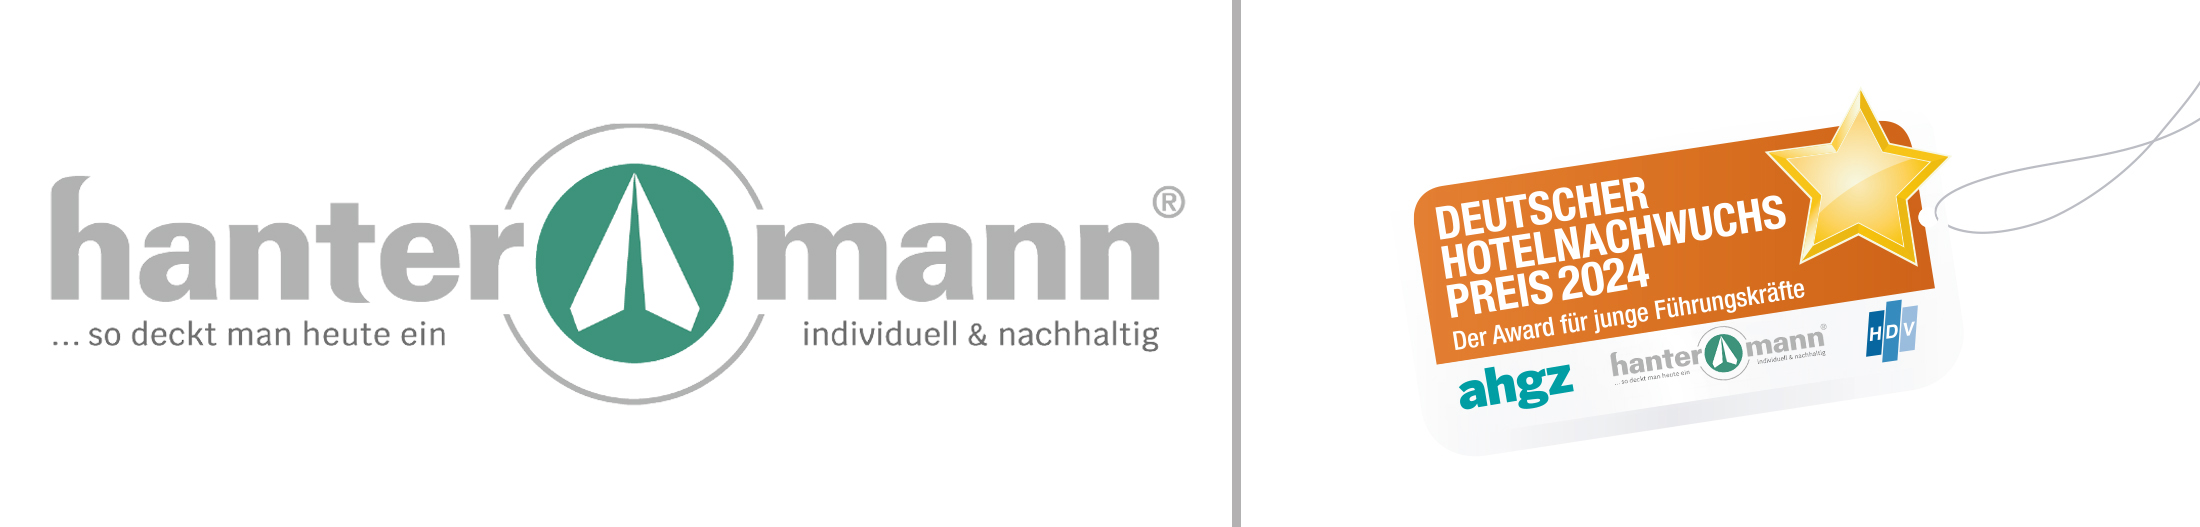 Hantermann Logo